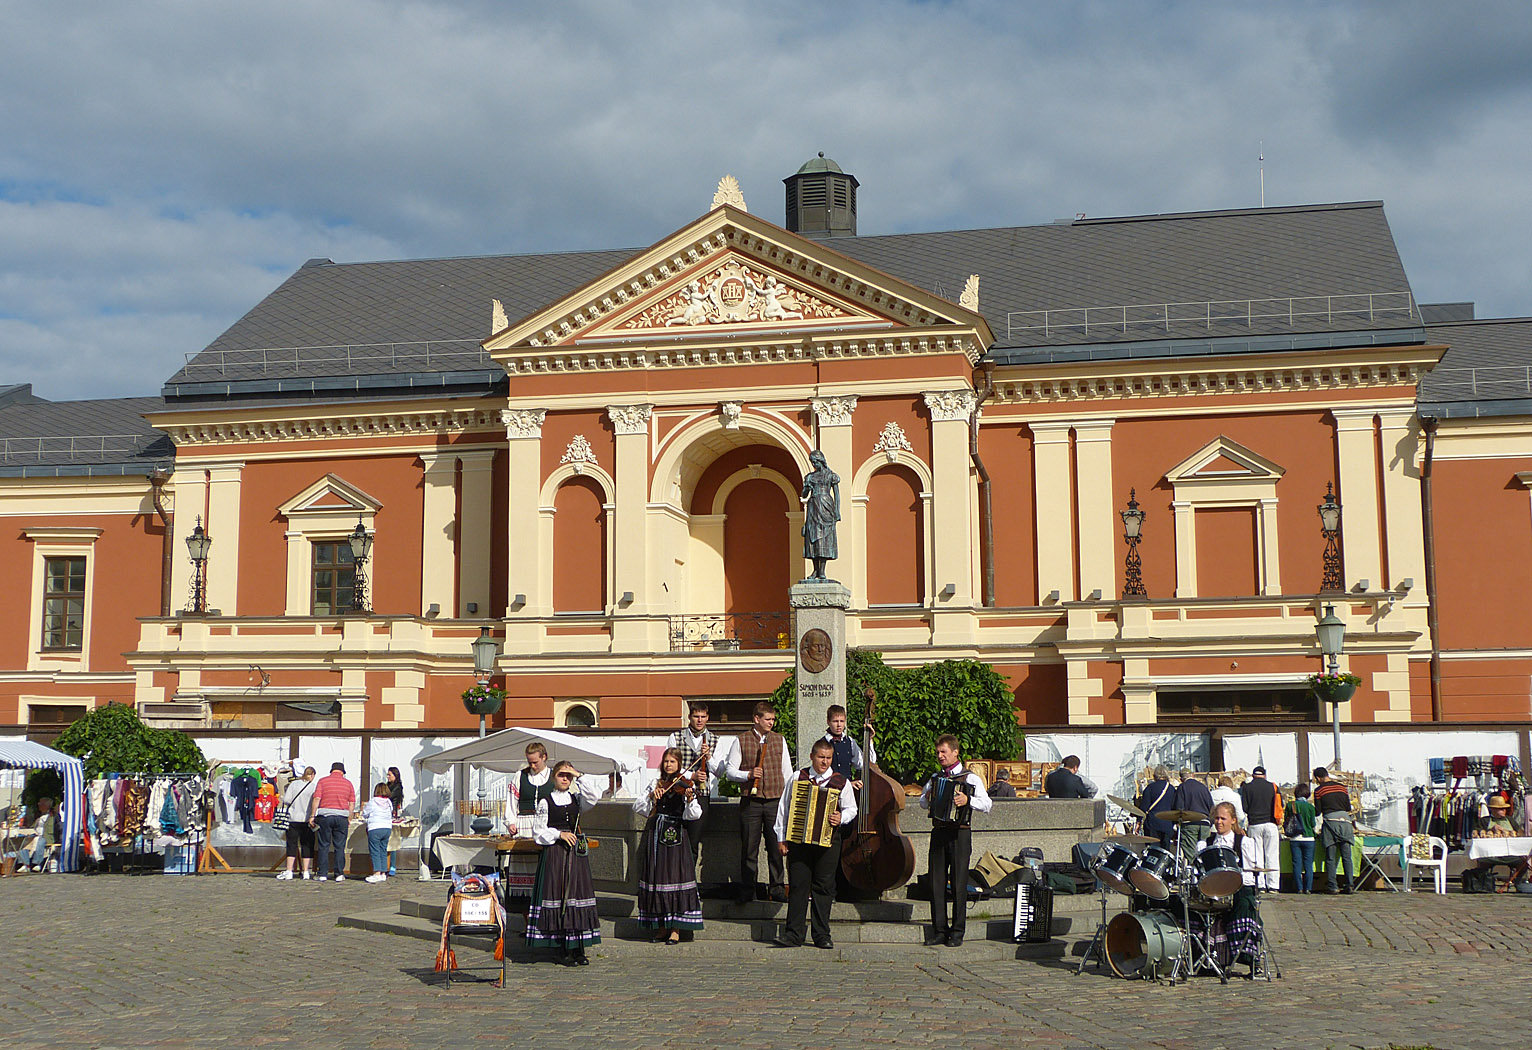 Theatre Square, Klaipeda, Lithuania